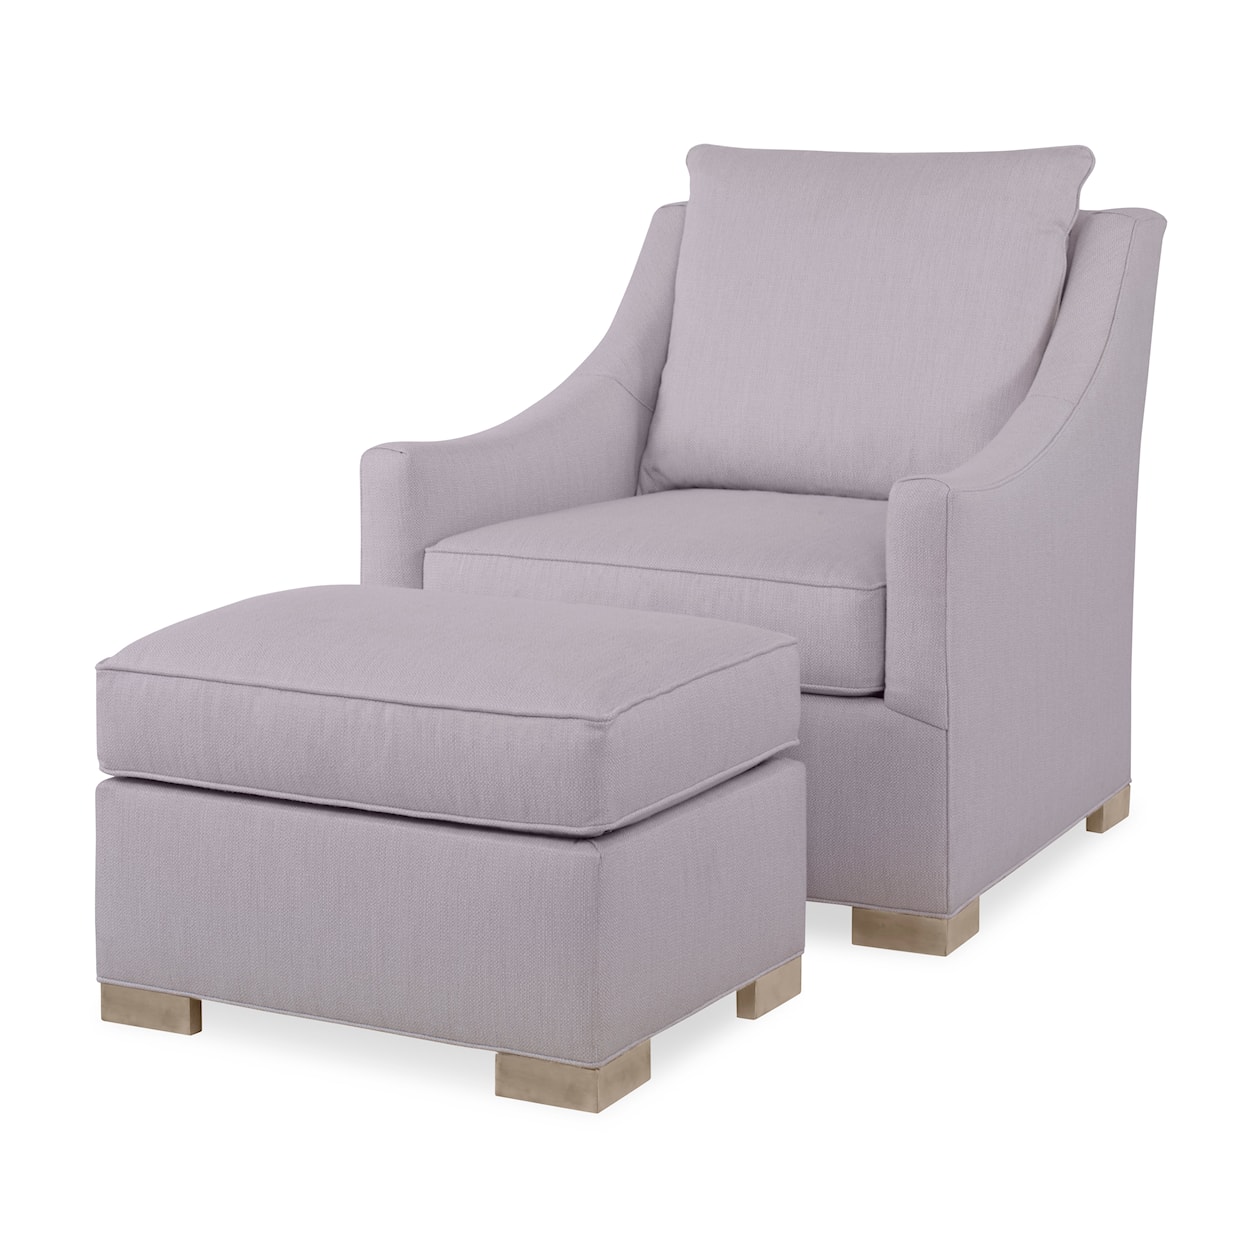 Century Outdoor Upholstery Willem Outdoor Chair